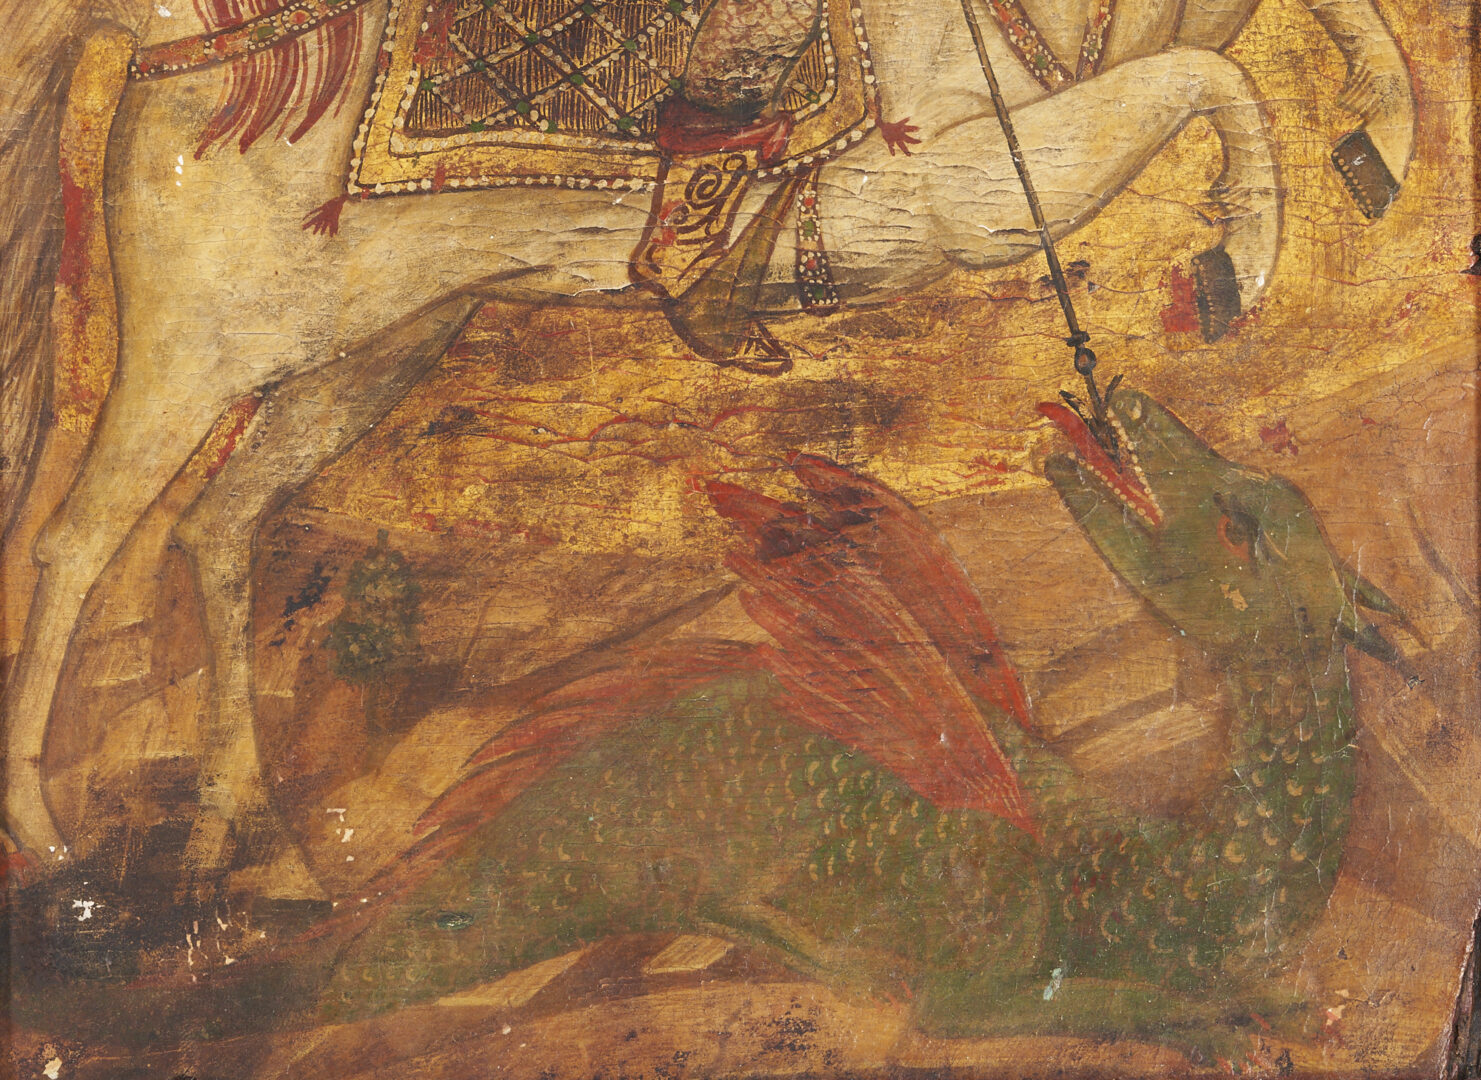 Lot 303: Greek Icon, St. George Slaying the Dragon